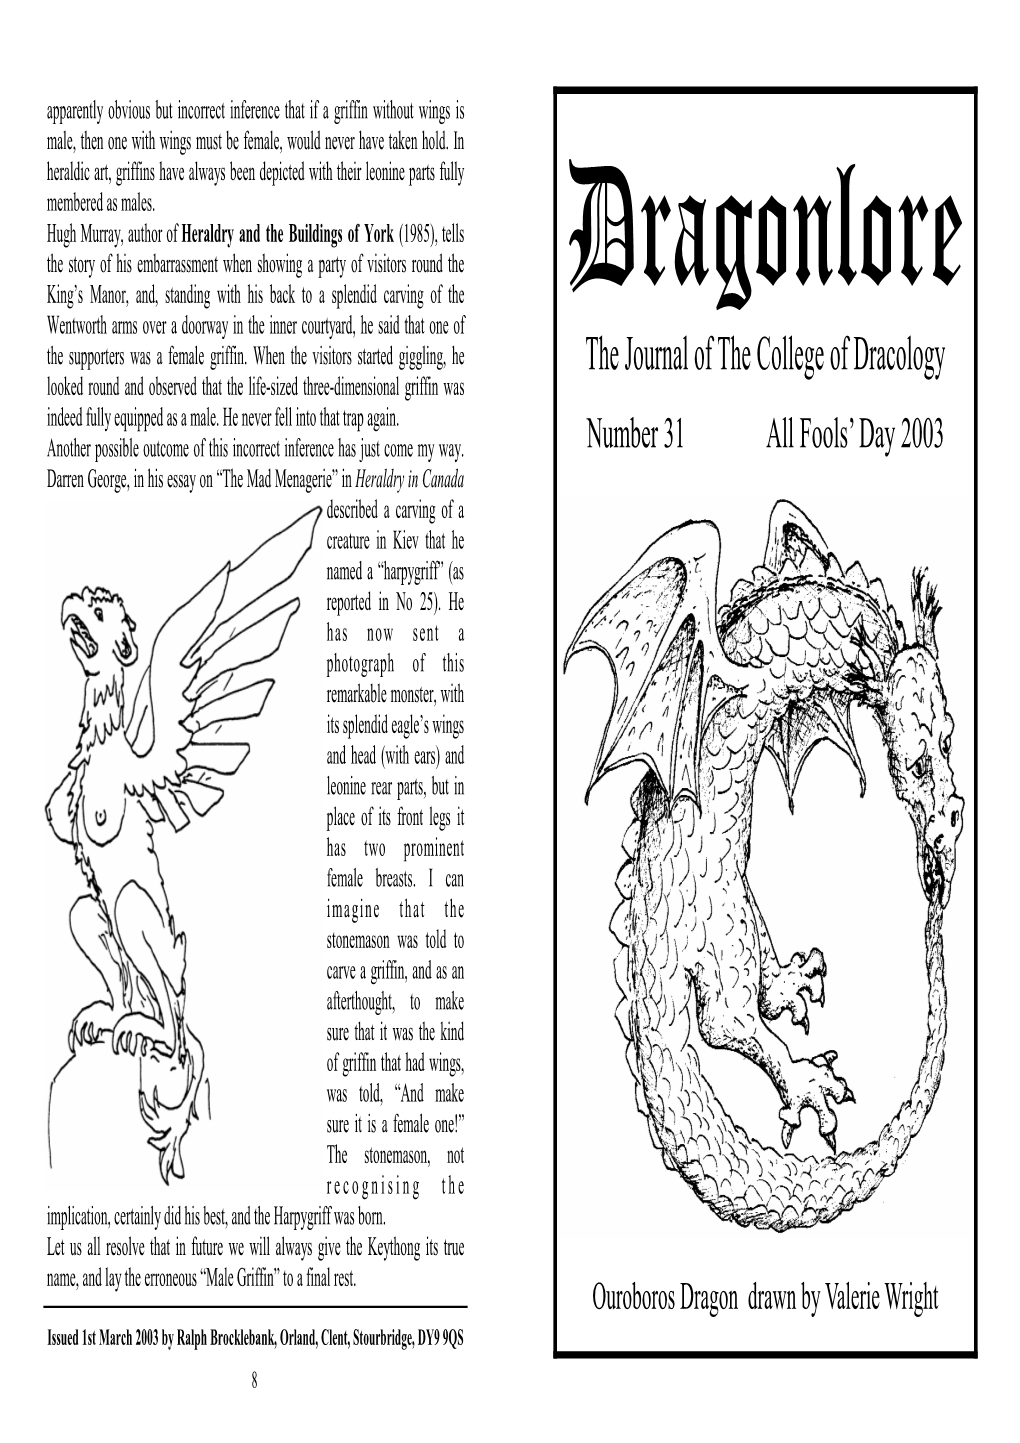 Dragonlore Issue 31 27-03-03